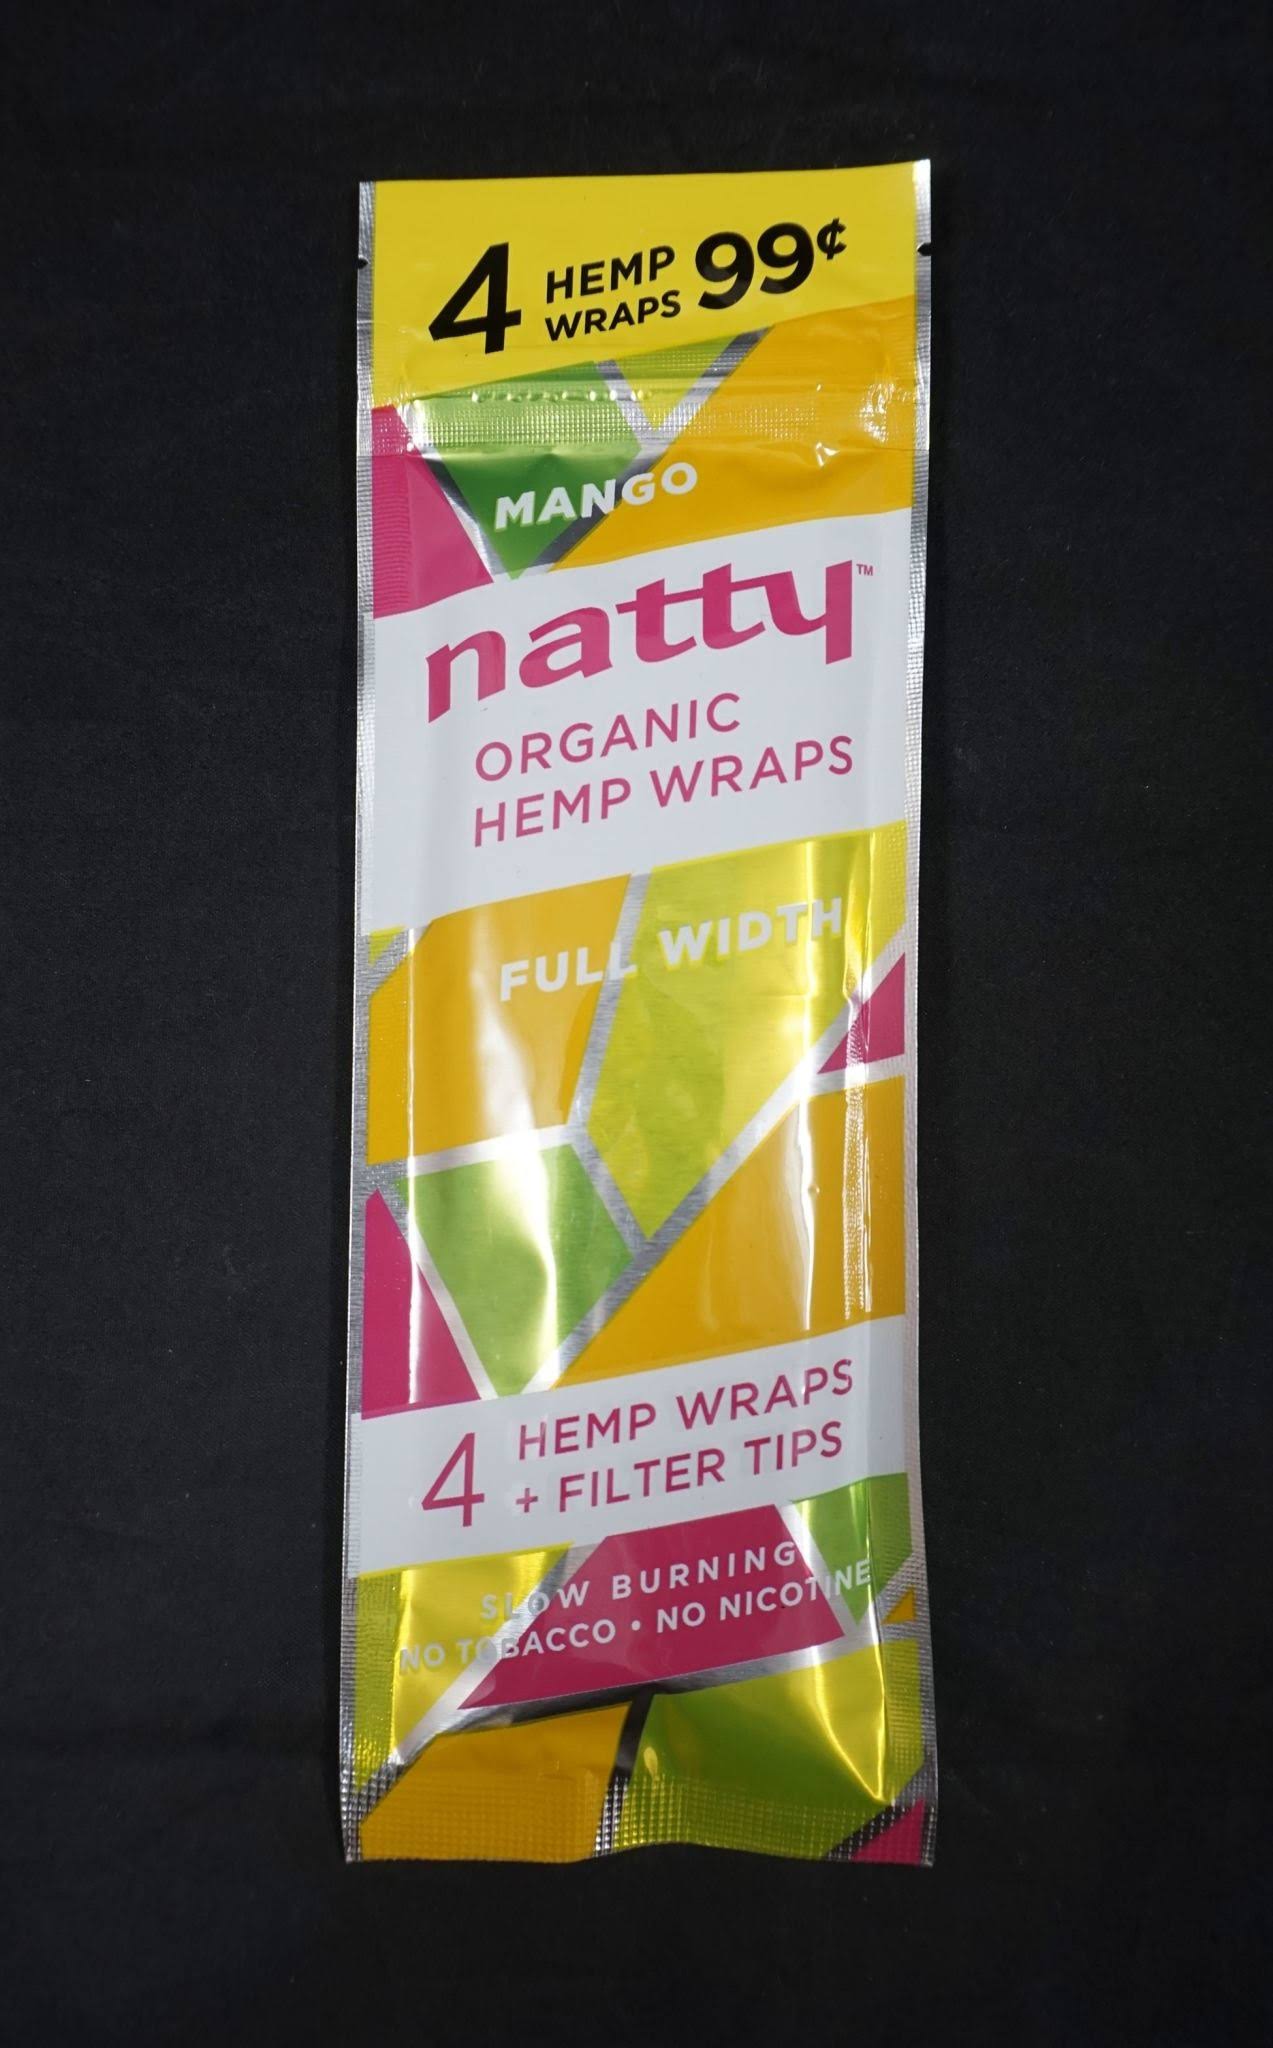 Natty Wraps Natty Organic Hemp Wraps Mango